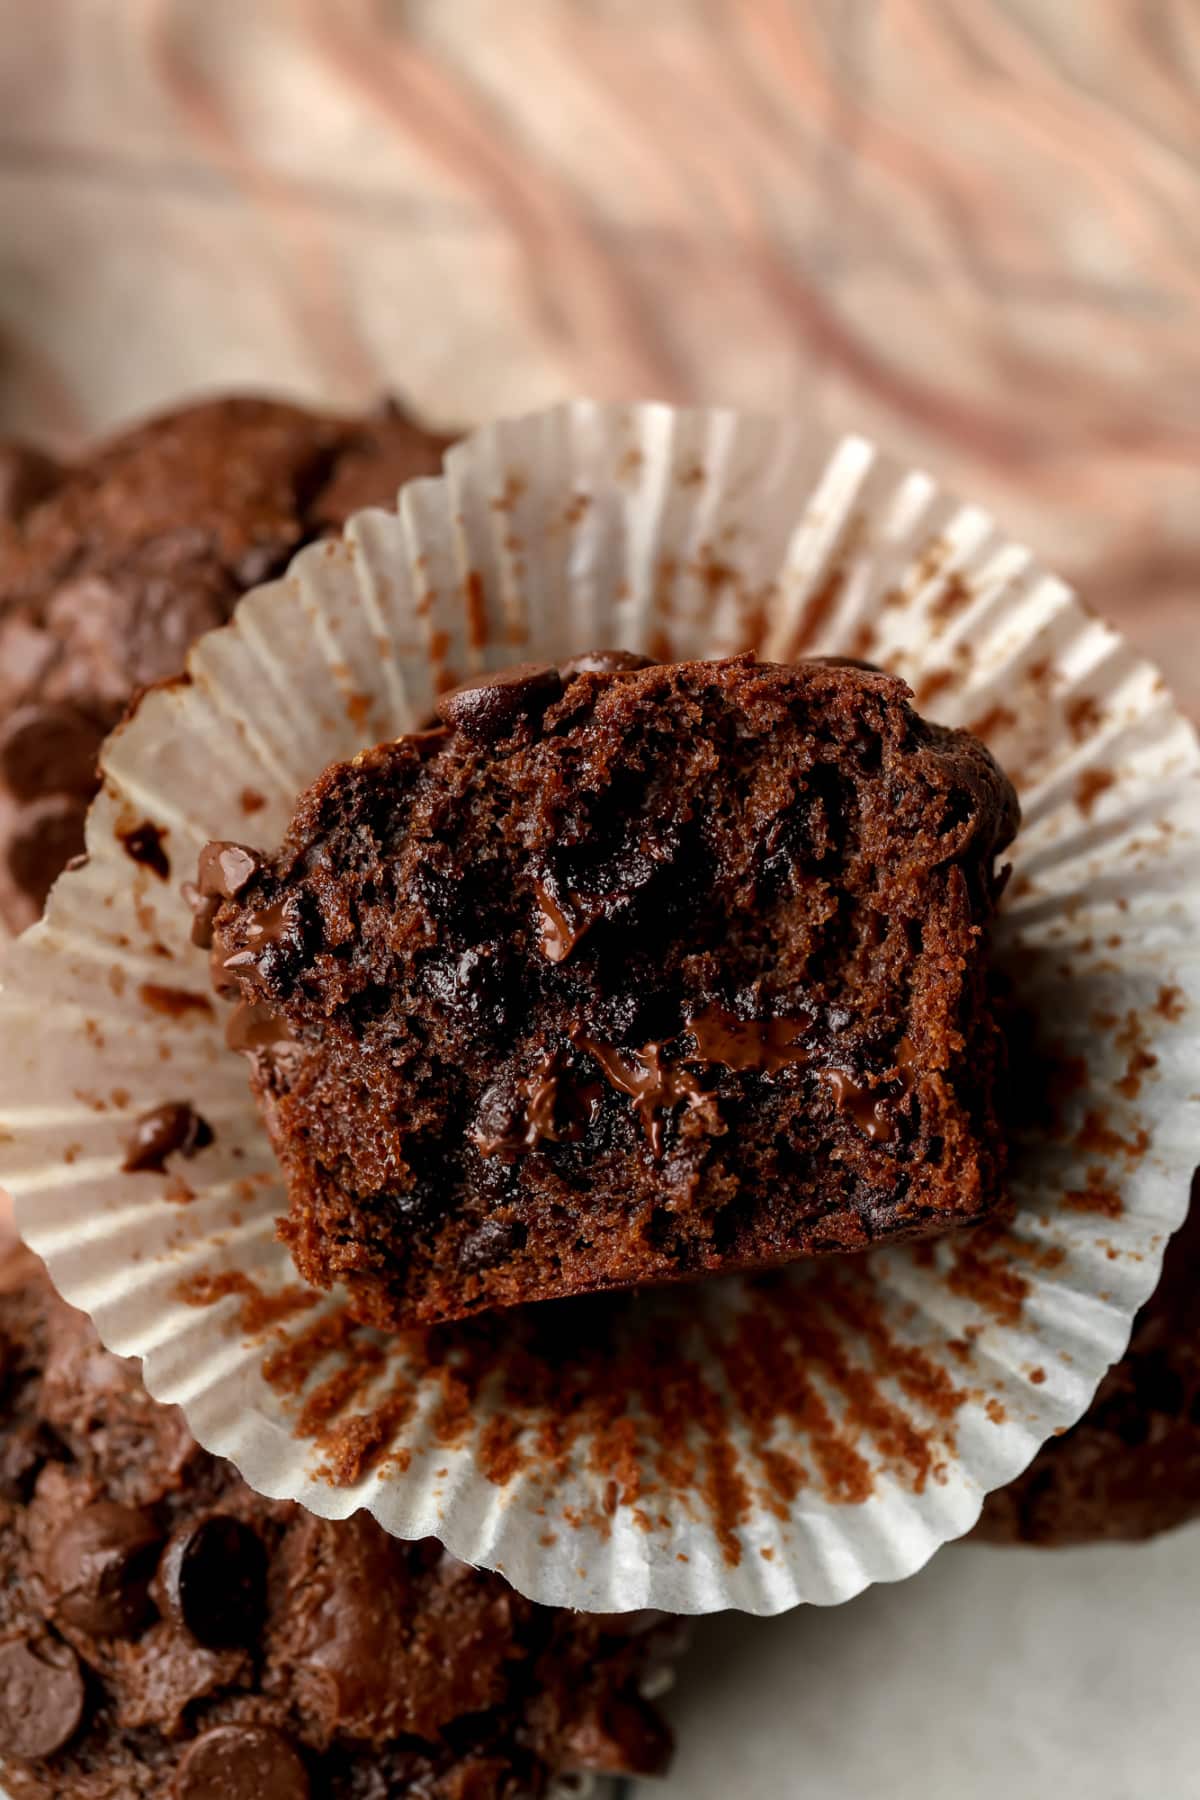 showing cut in half vegan chocolate muffin, showing gooey chocolate inside